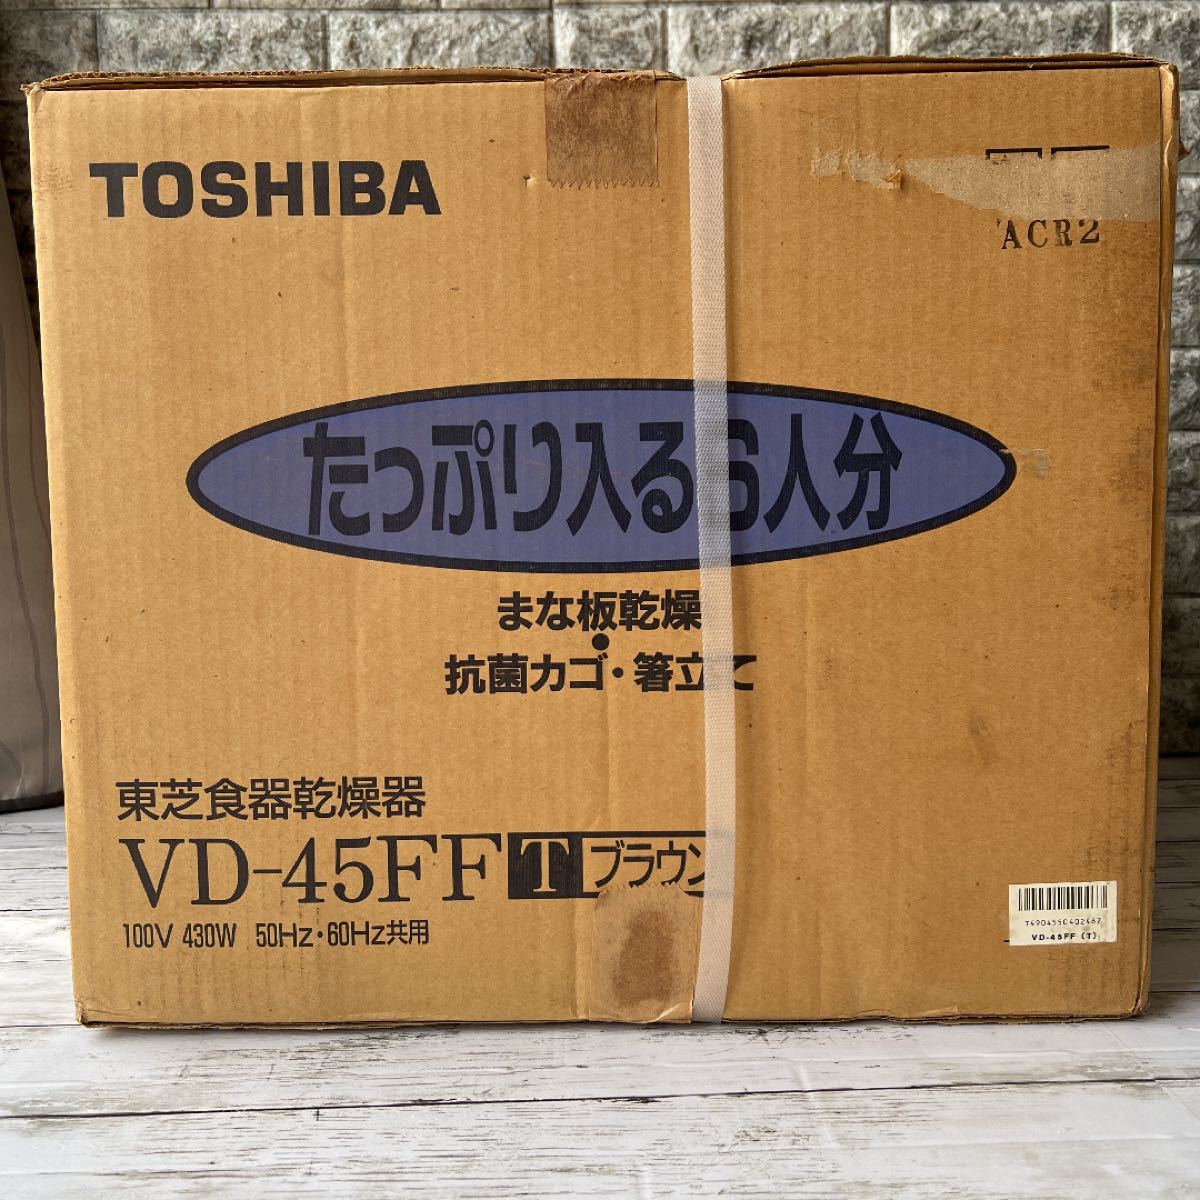 TOSHIBA 食器乾燥機 VD-45FF(T)